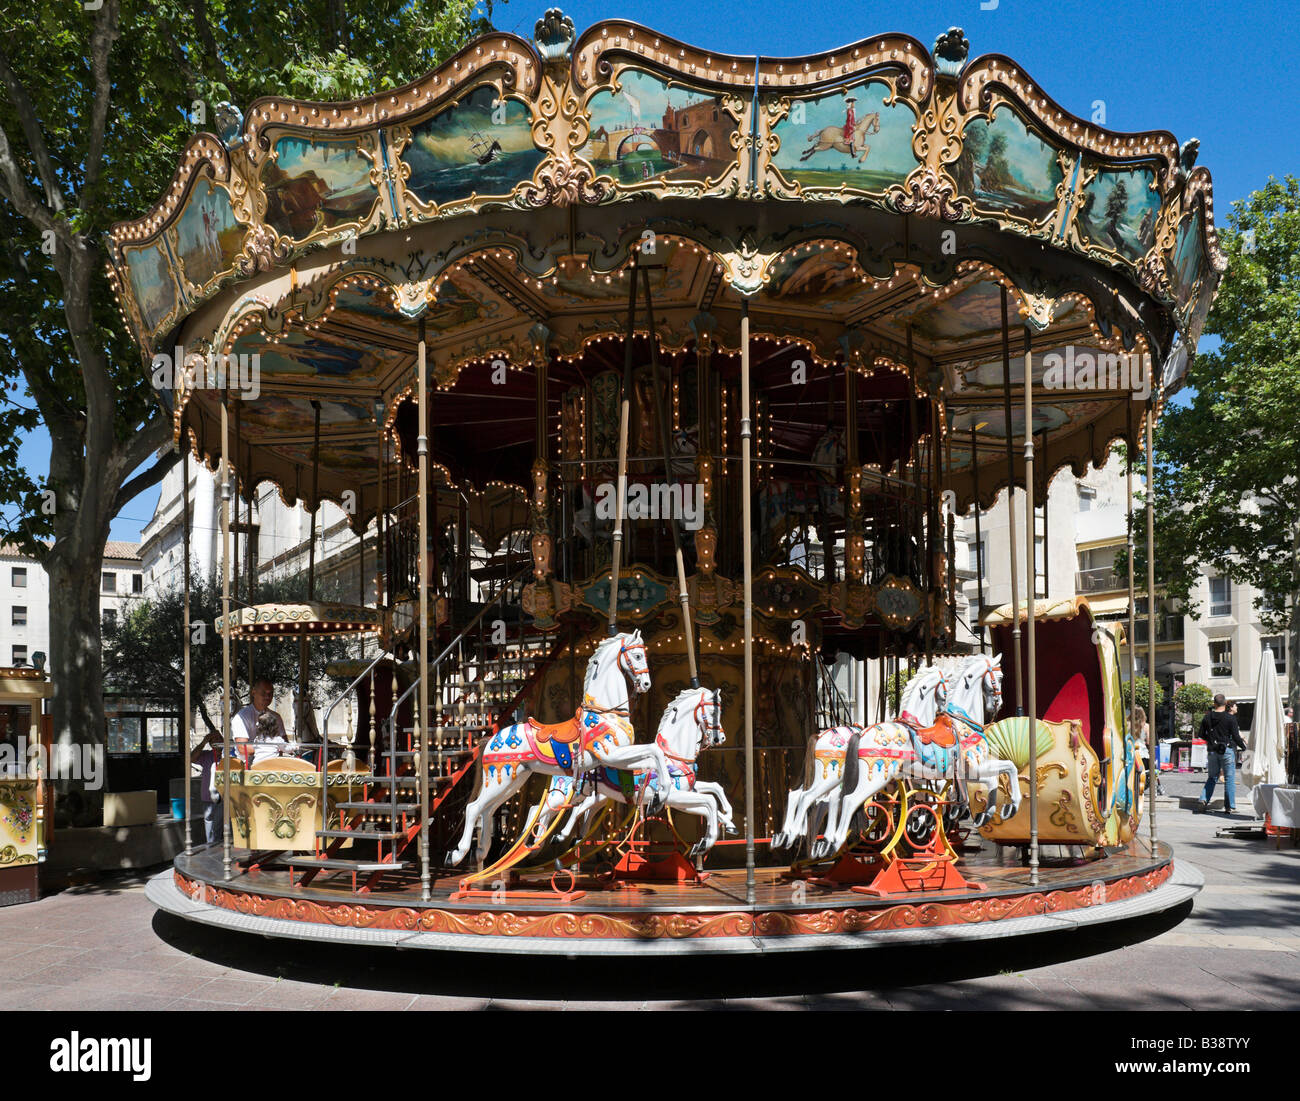 Carrusel en frente del Hotel de Ville, Place d l'Horloge Avignon Provence, Francia Foto de stock